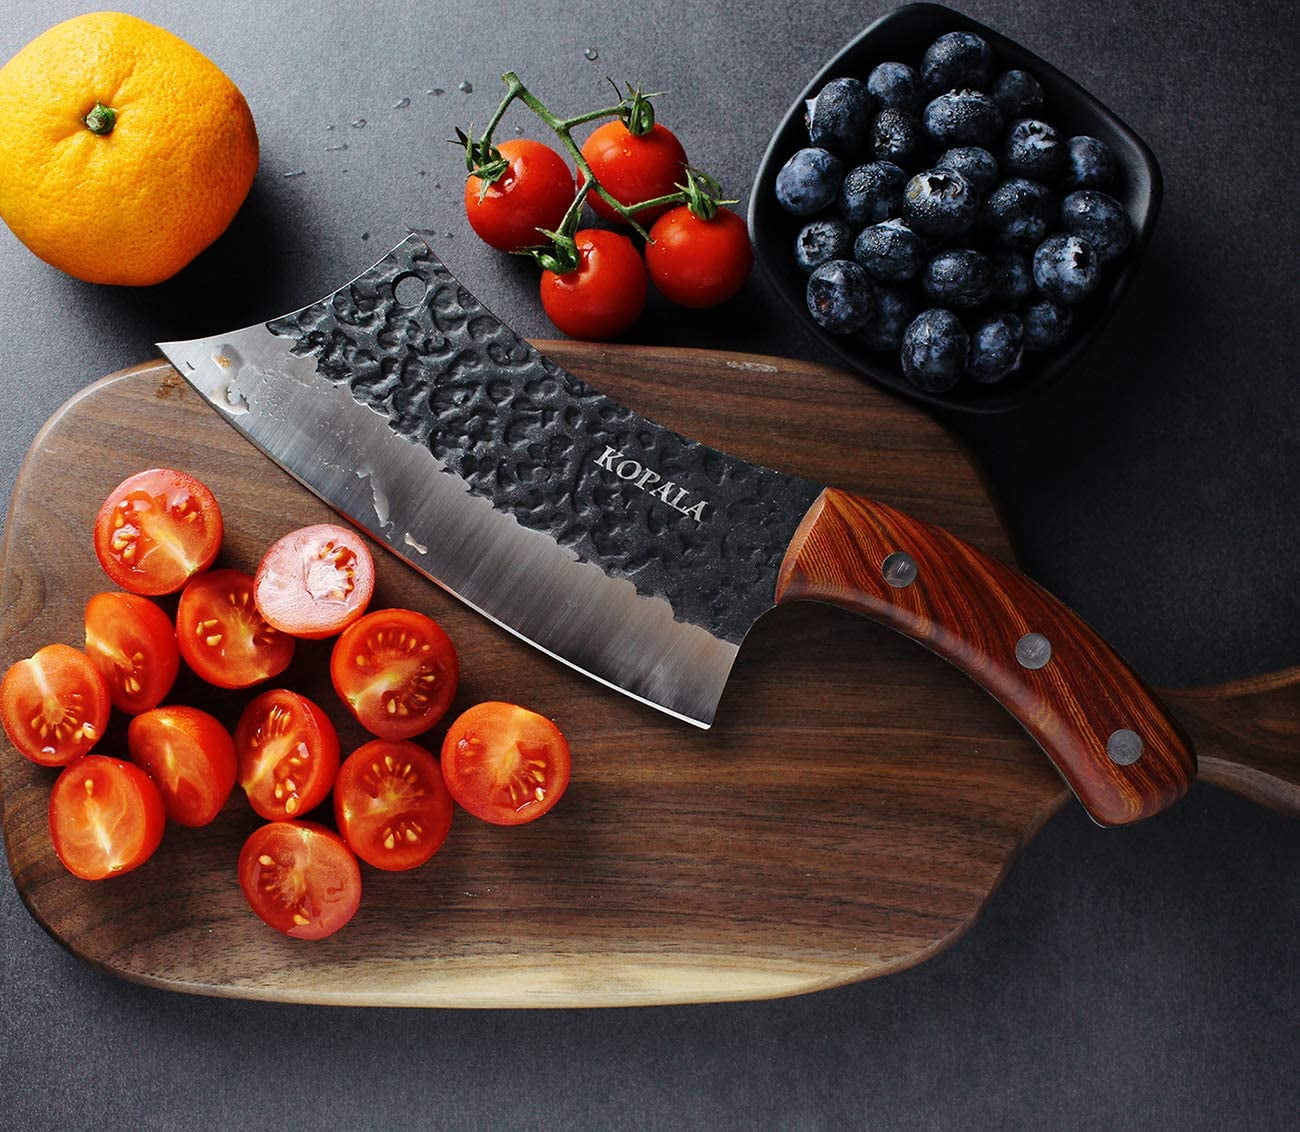 Tomato & Citrus Knife